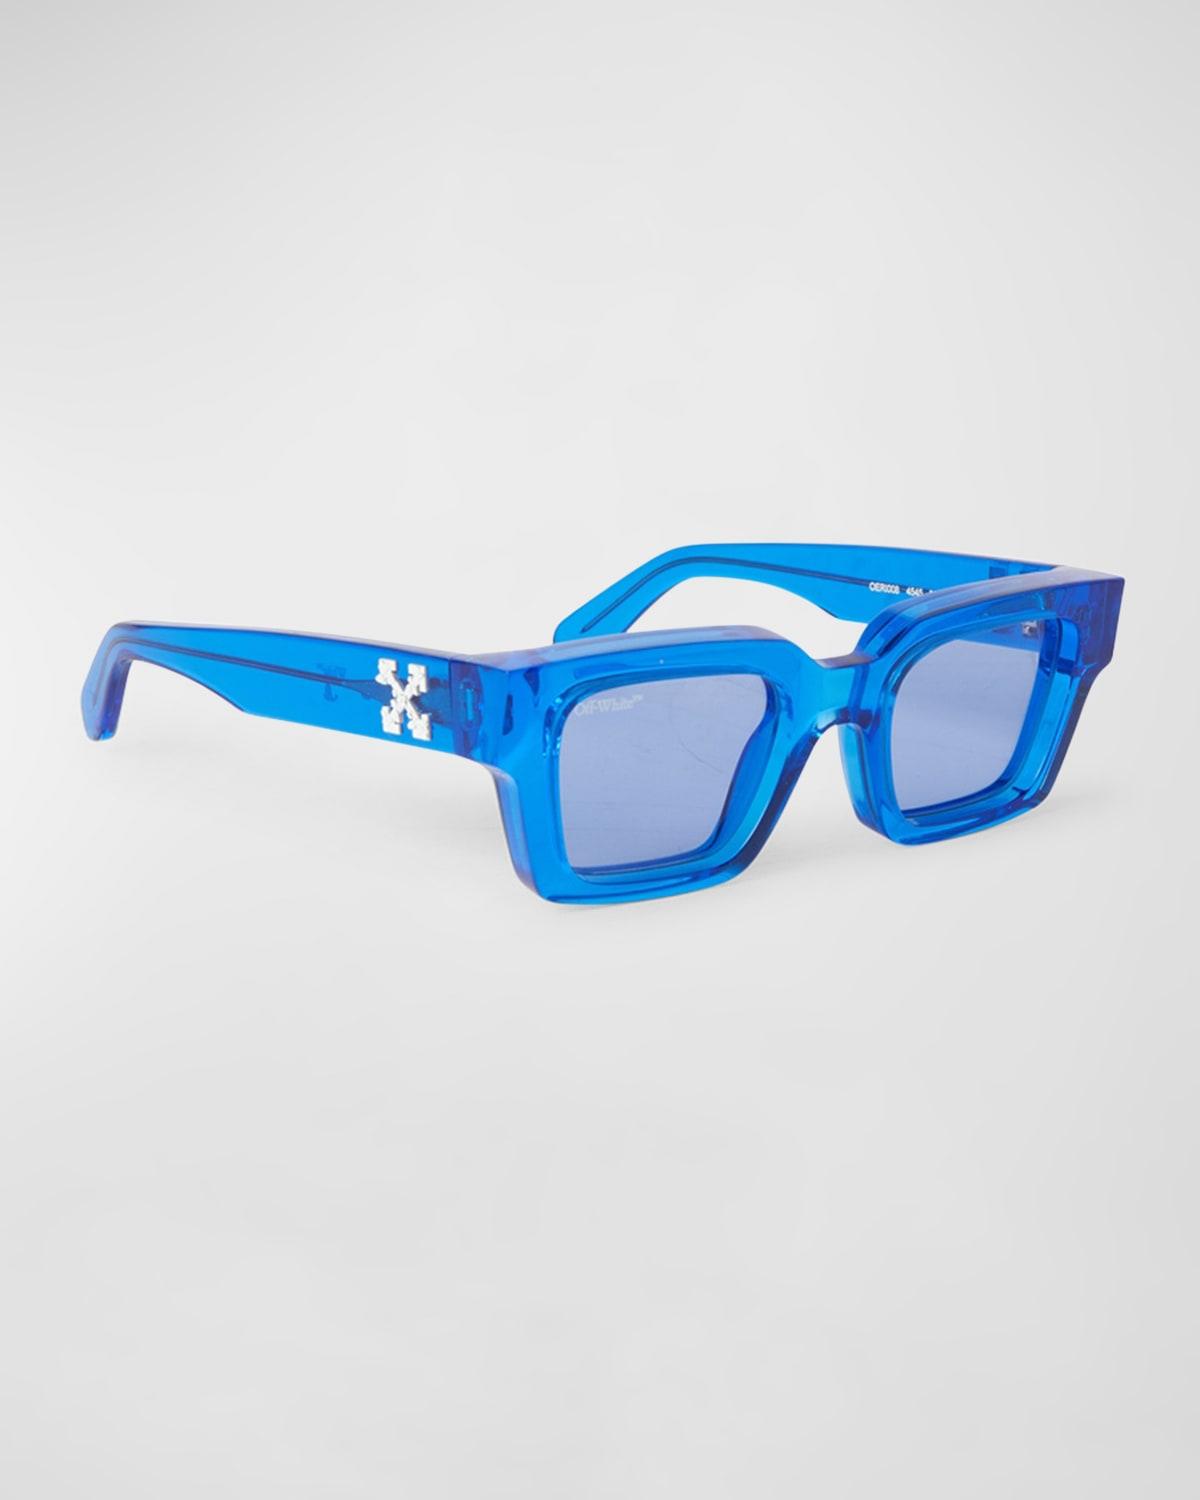 Off-White Men's Manchester Acetate Rectangle Sunglasses, Blue, Men's, Sunglasses Square Sunglasses